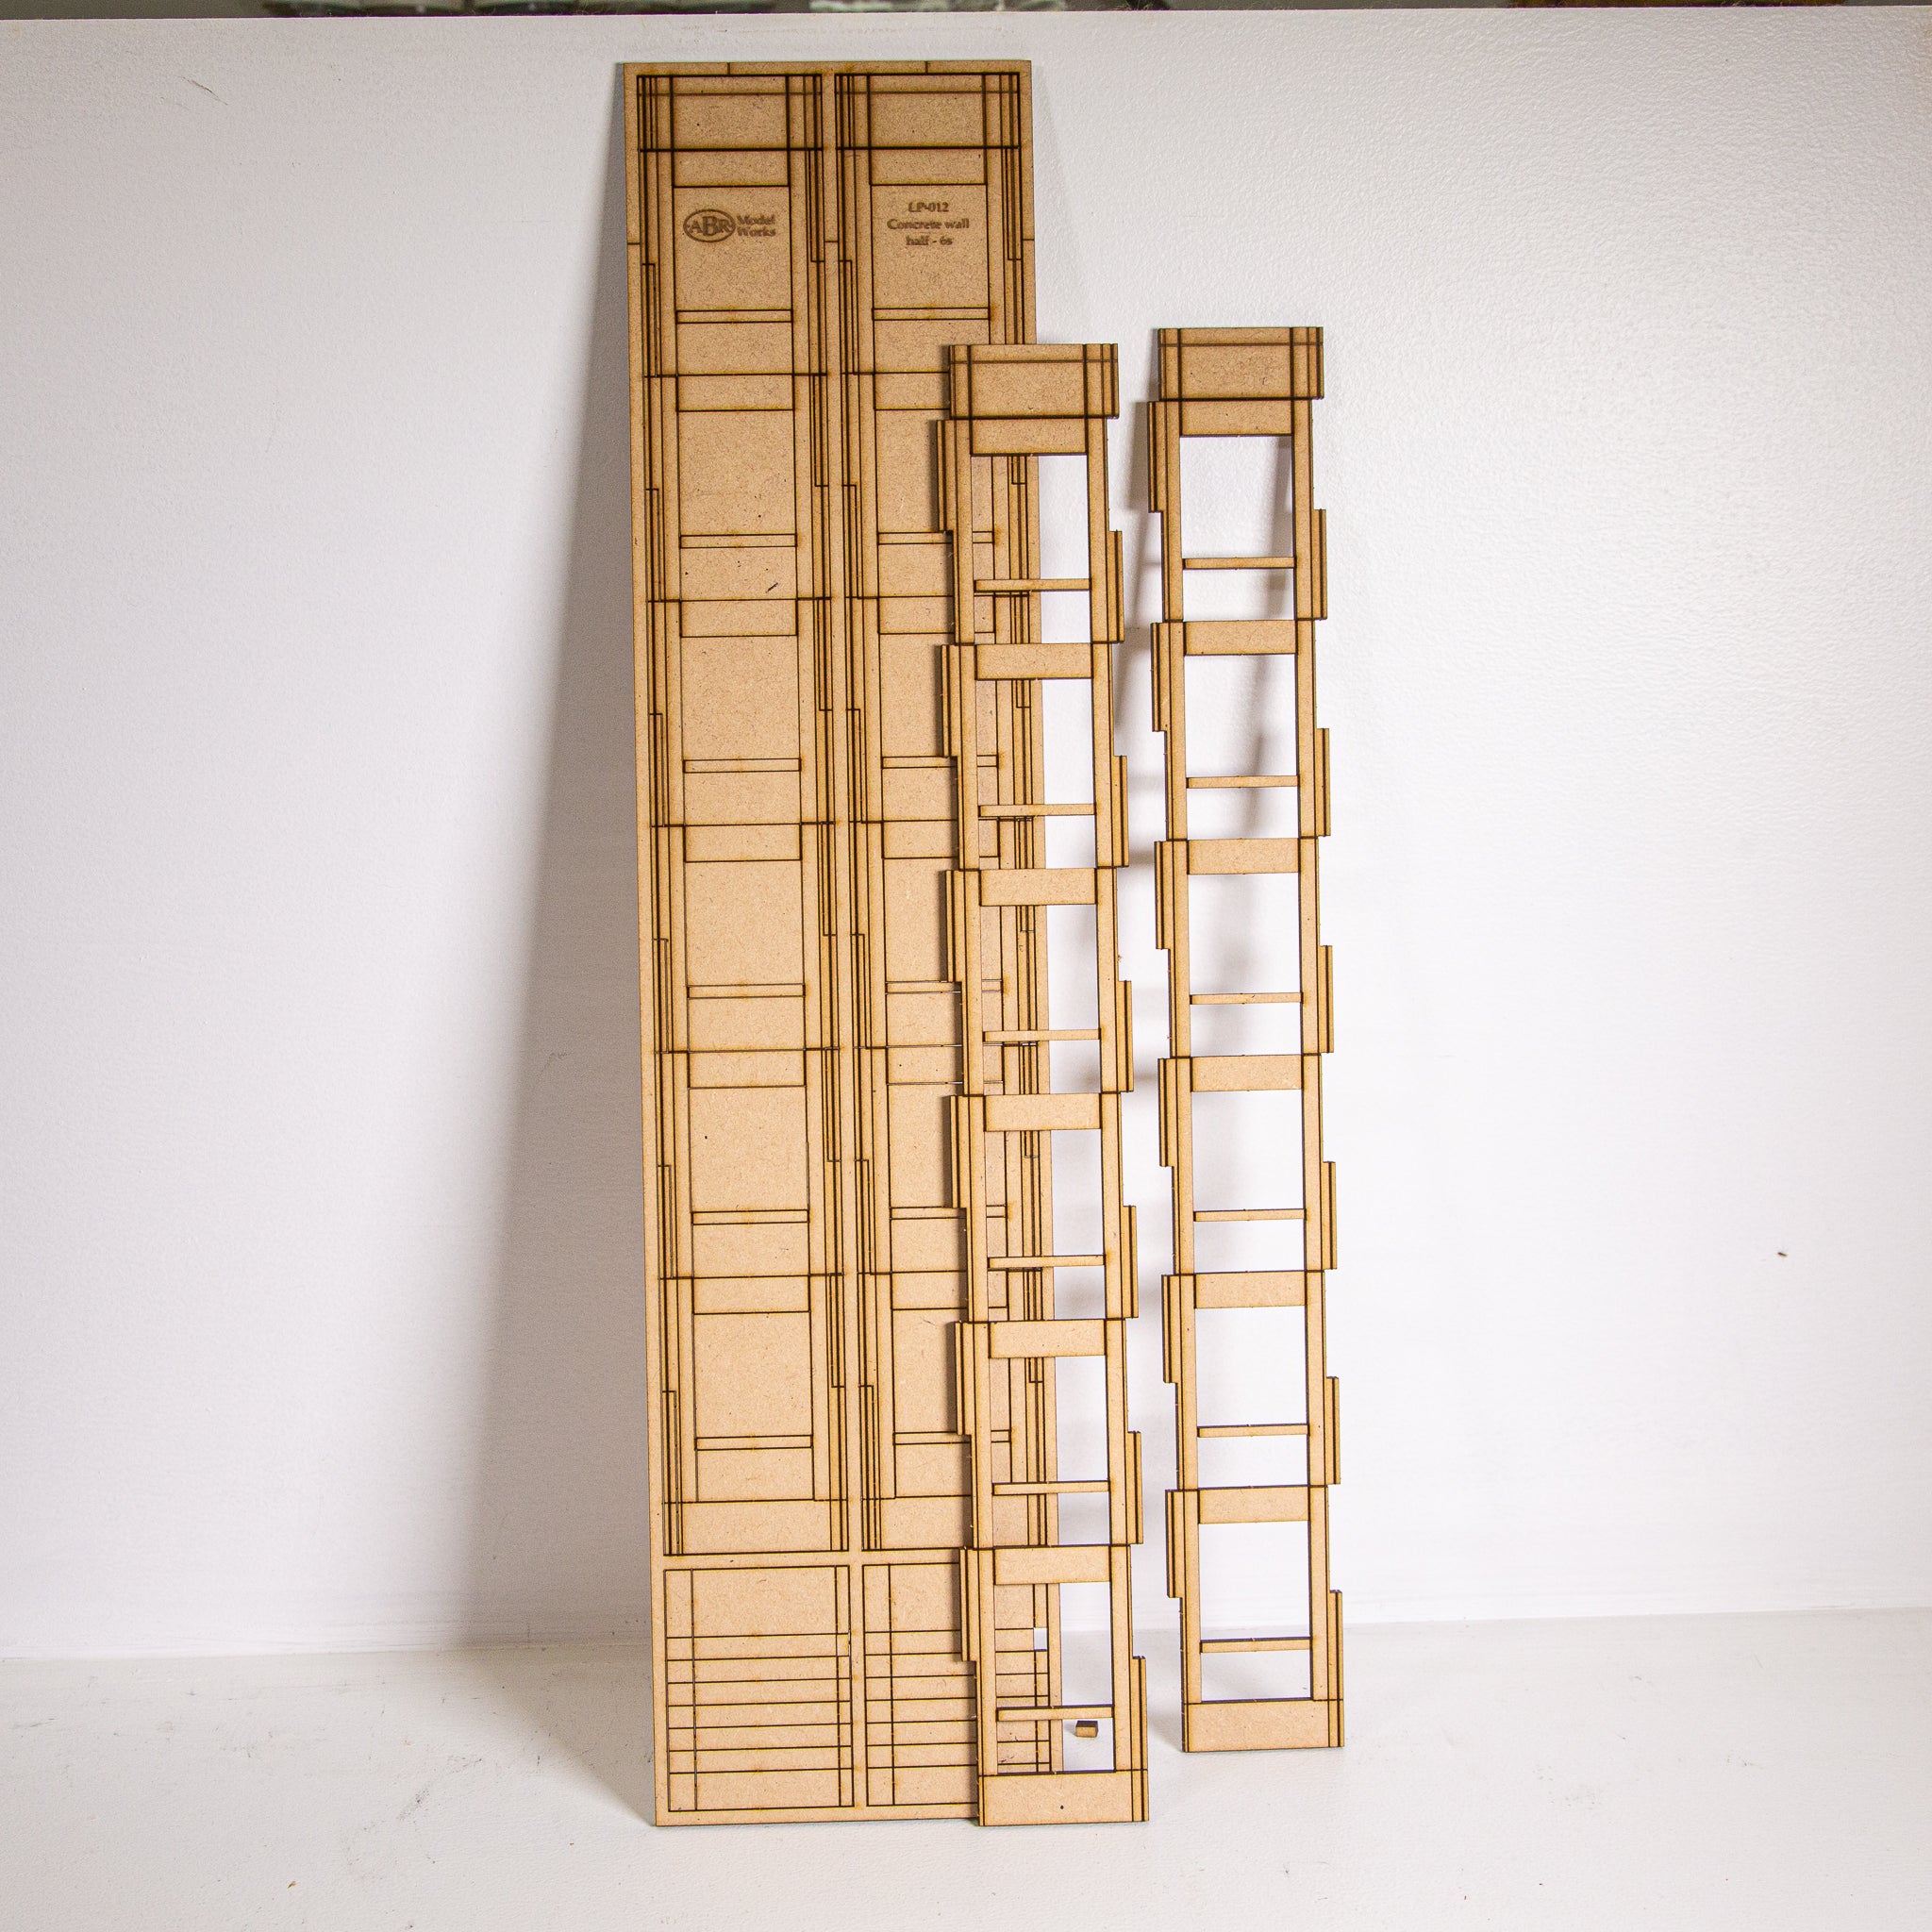 LP012 - HO Scale - Concrete modular model wall half-width panel 2 openings per storey, 6 storey